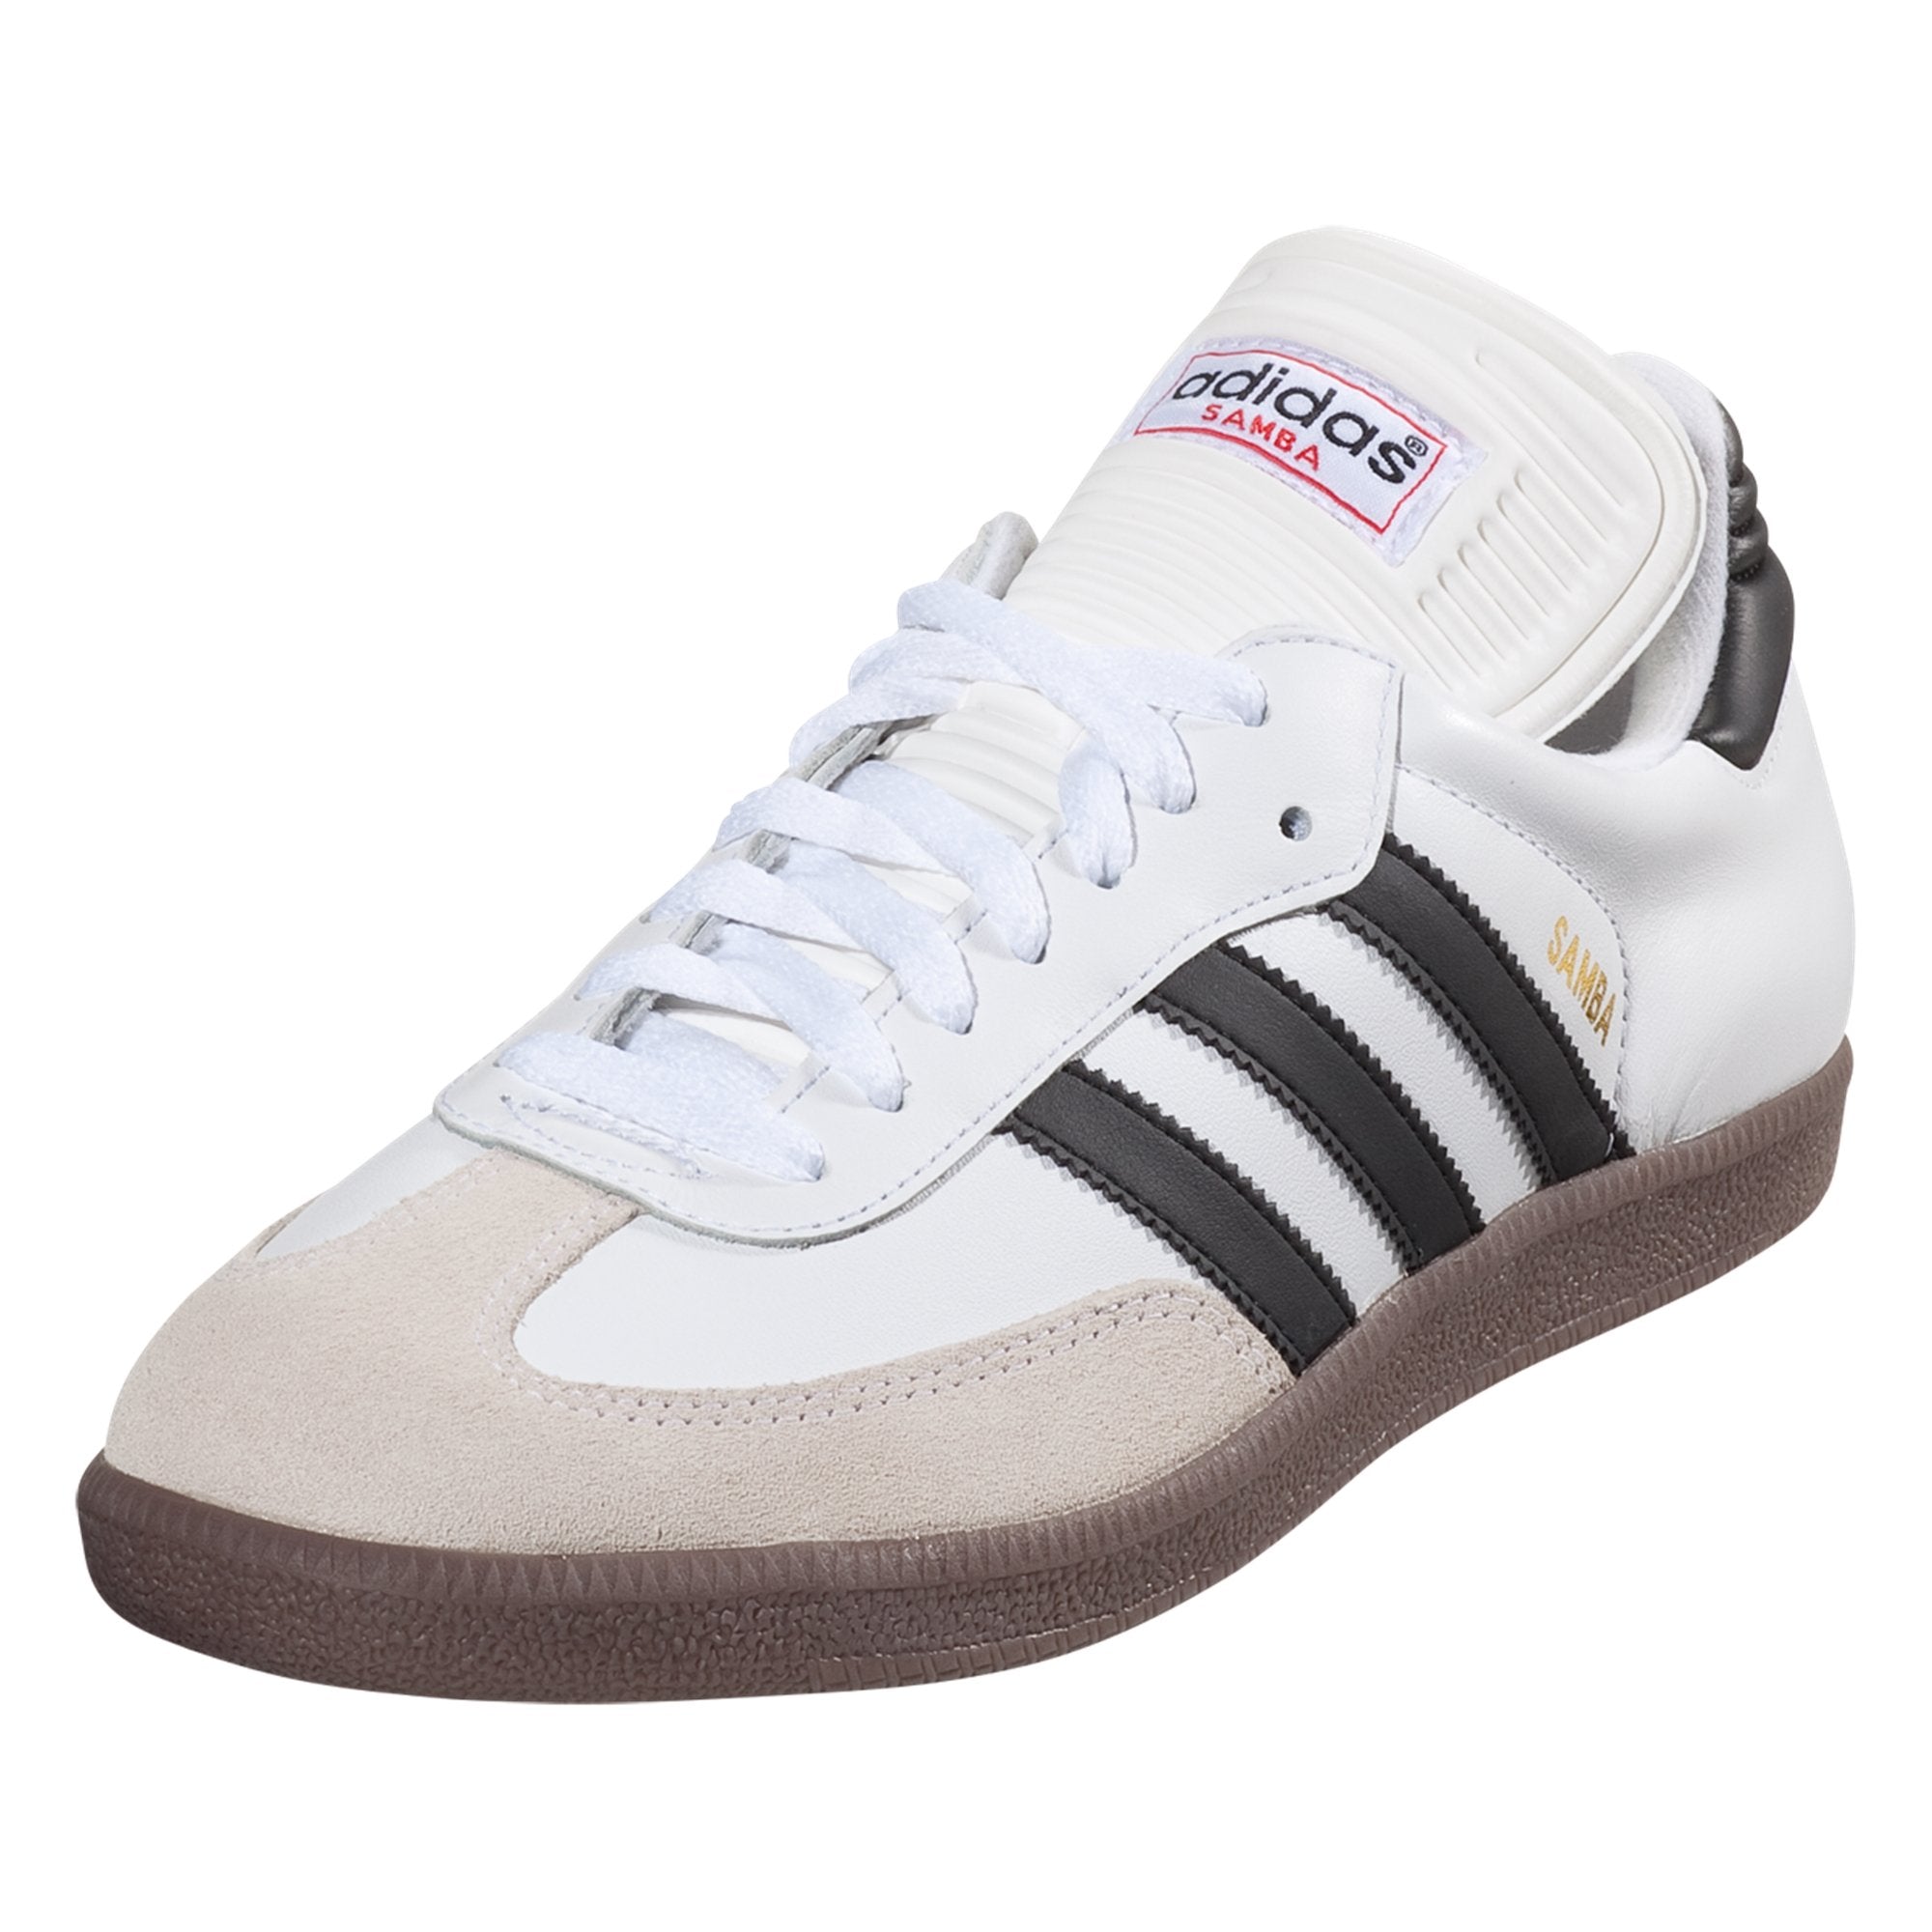 adidas Samba Classic Soccer Shoe White/Black 772109 – Soccer USA